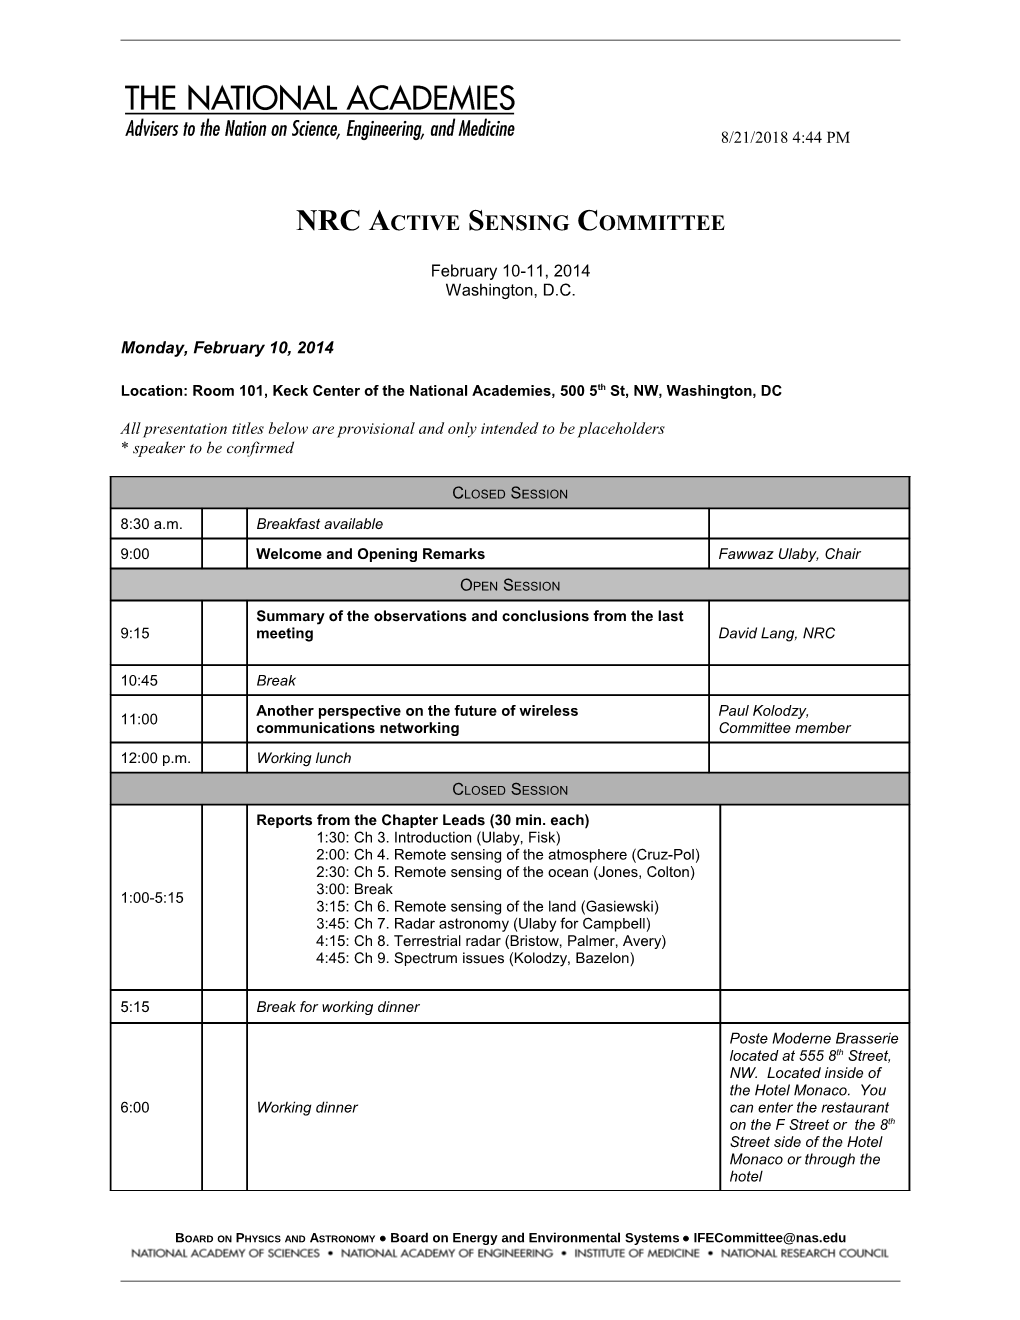 NRC Active Sensing Committee